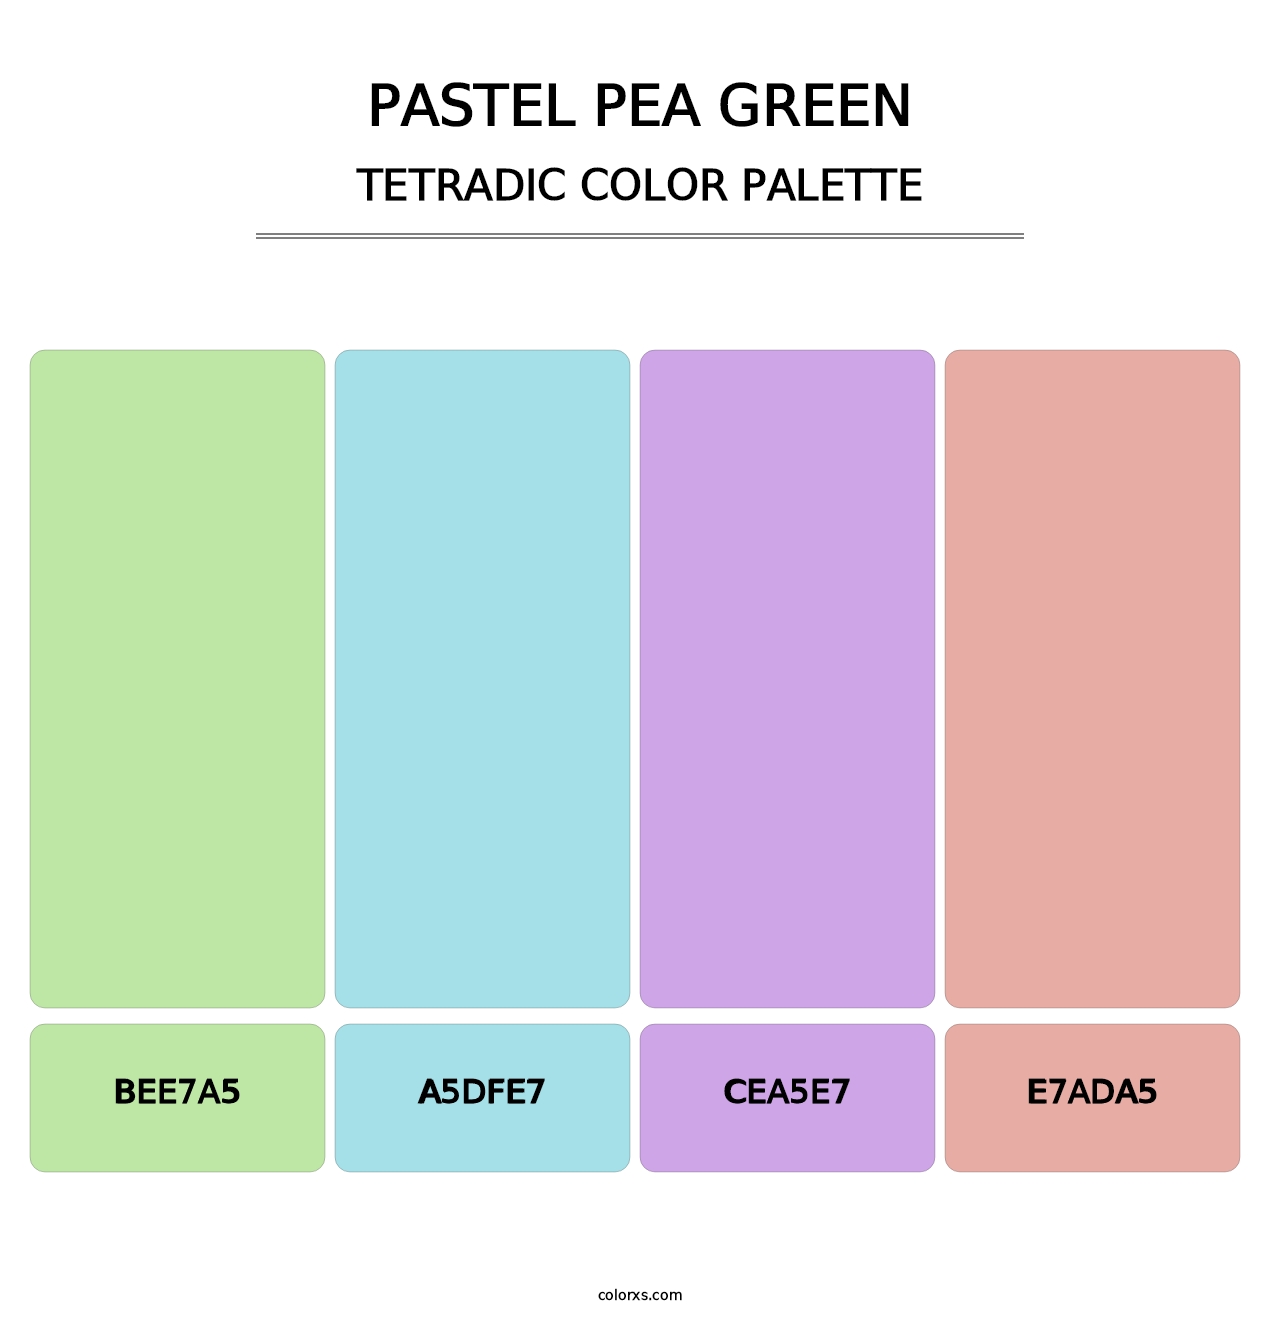 Pastel Pea Green - Tetradic Color Palette